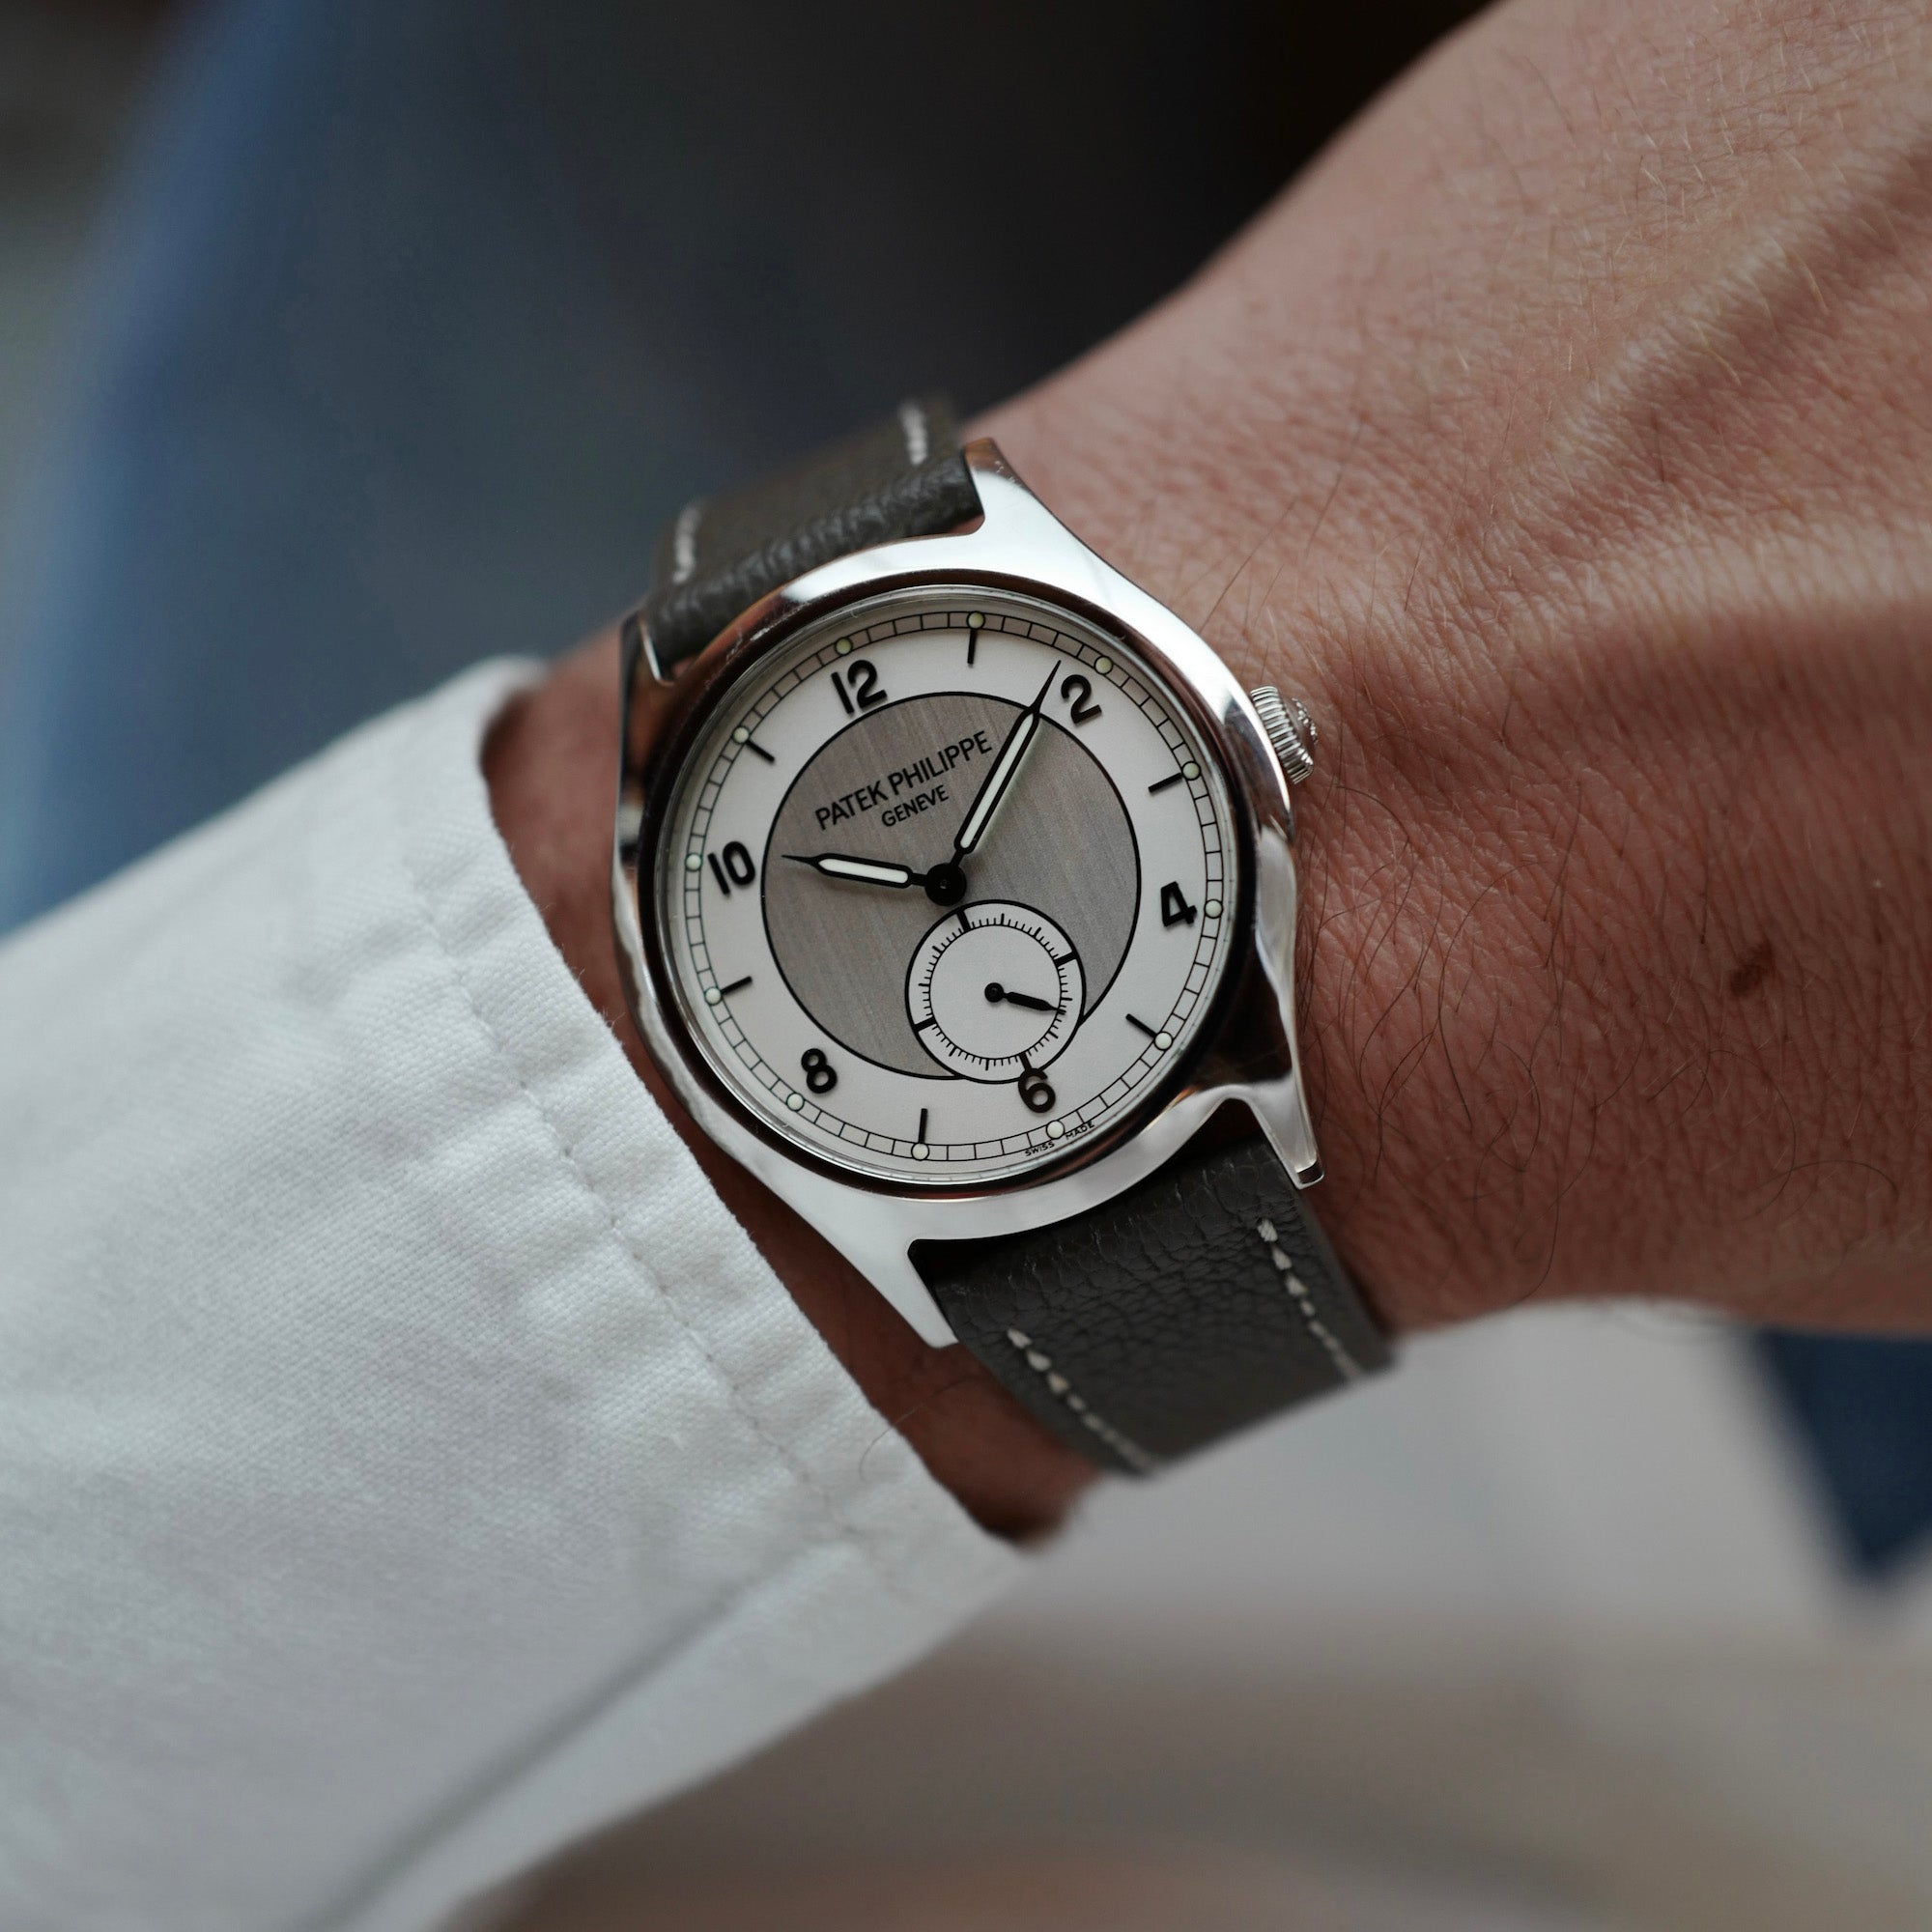 Patek Philippe Stainless Steel Calatrava Watch Ref. 5565